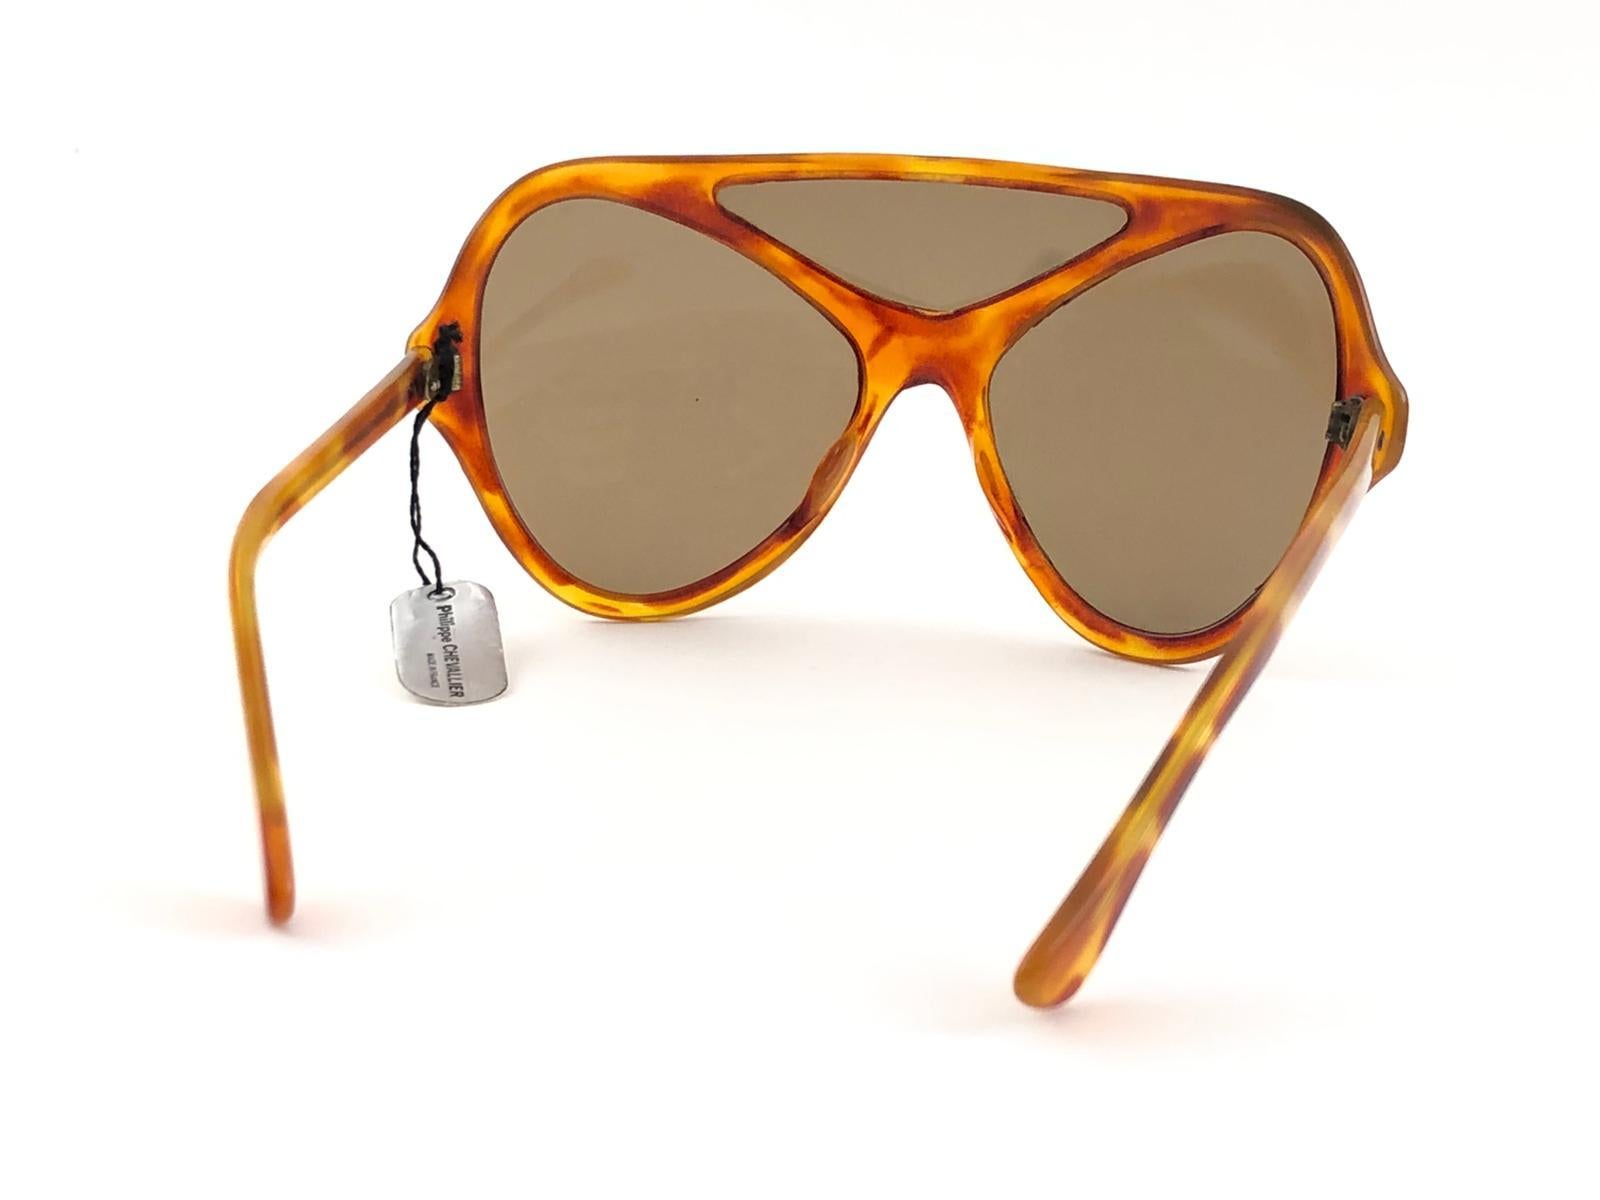 philippe chevallier sunglasses